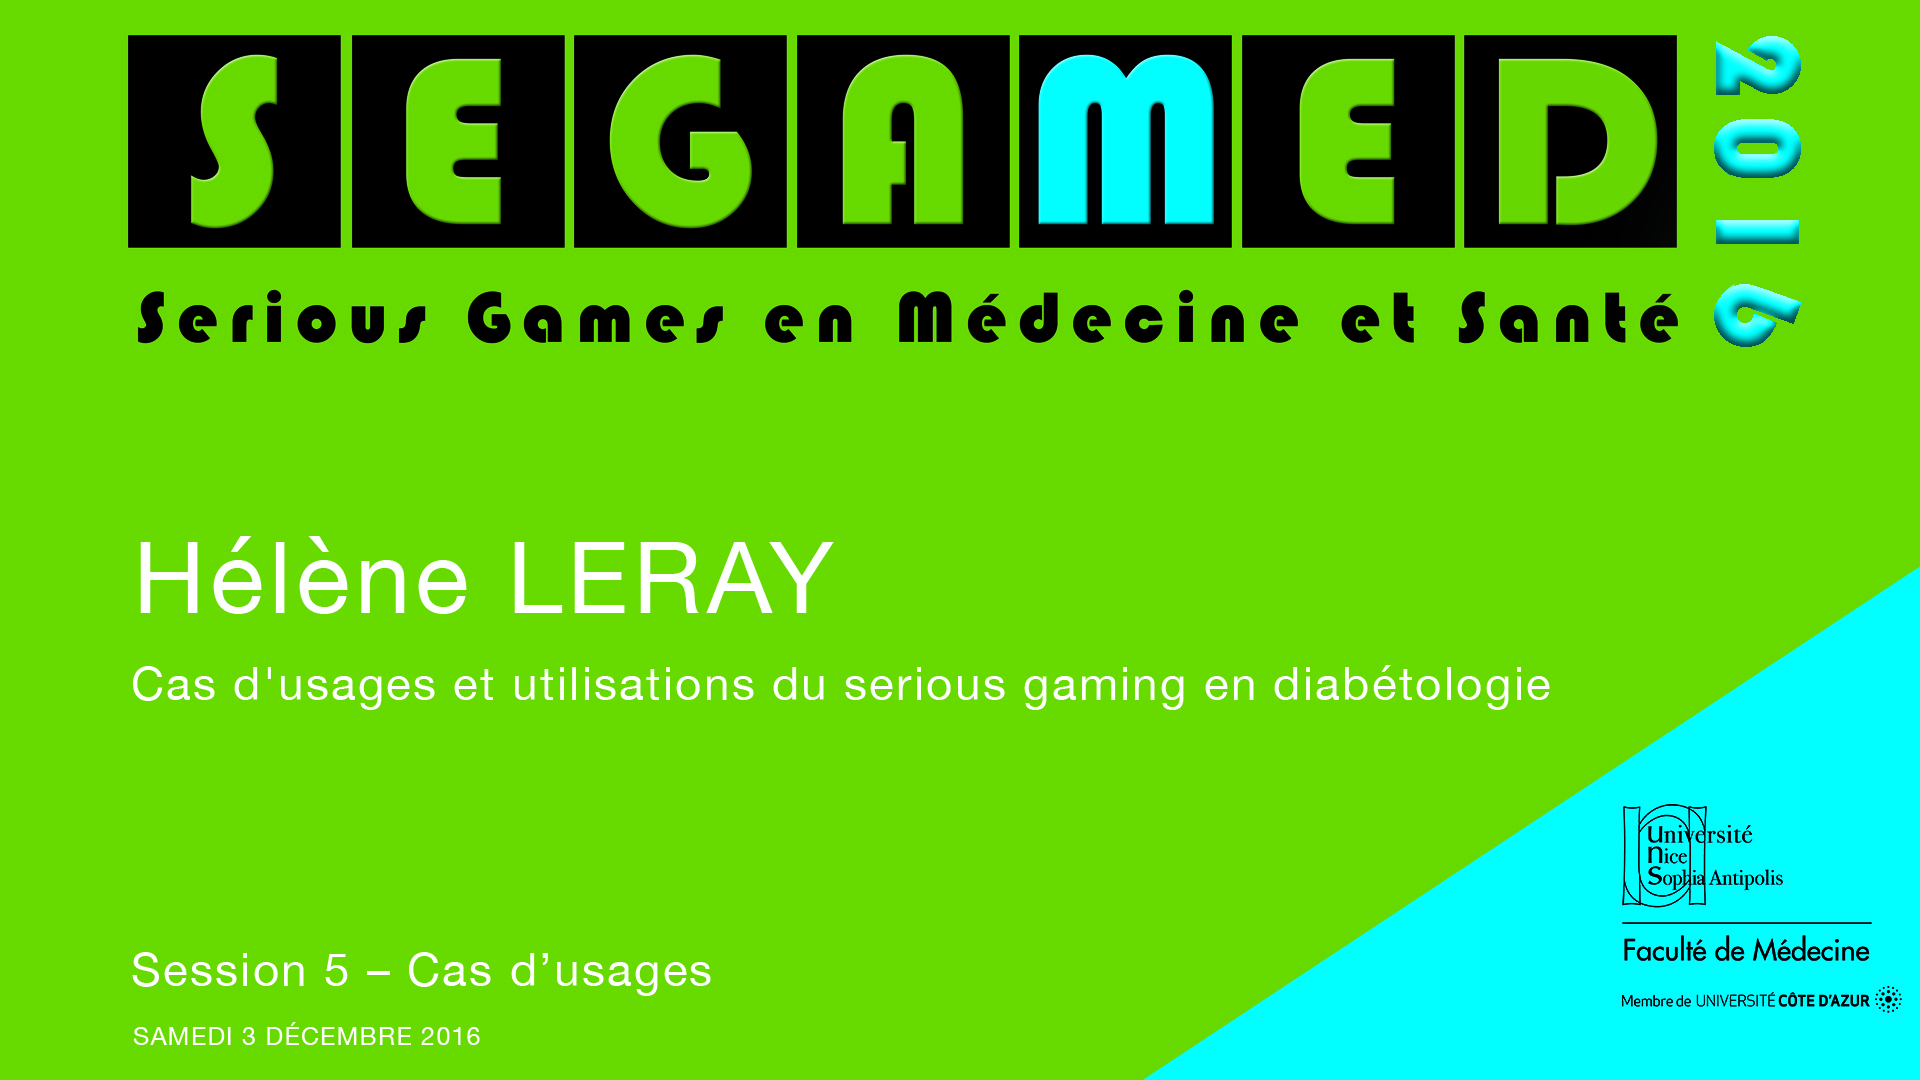 SEGAMED 2016 - Cas d'usages et utilisations du serious gaming en diabétologie